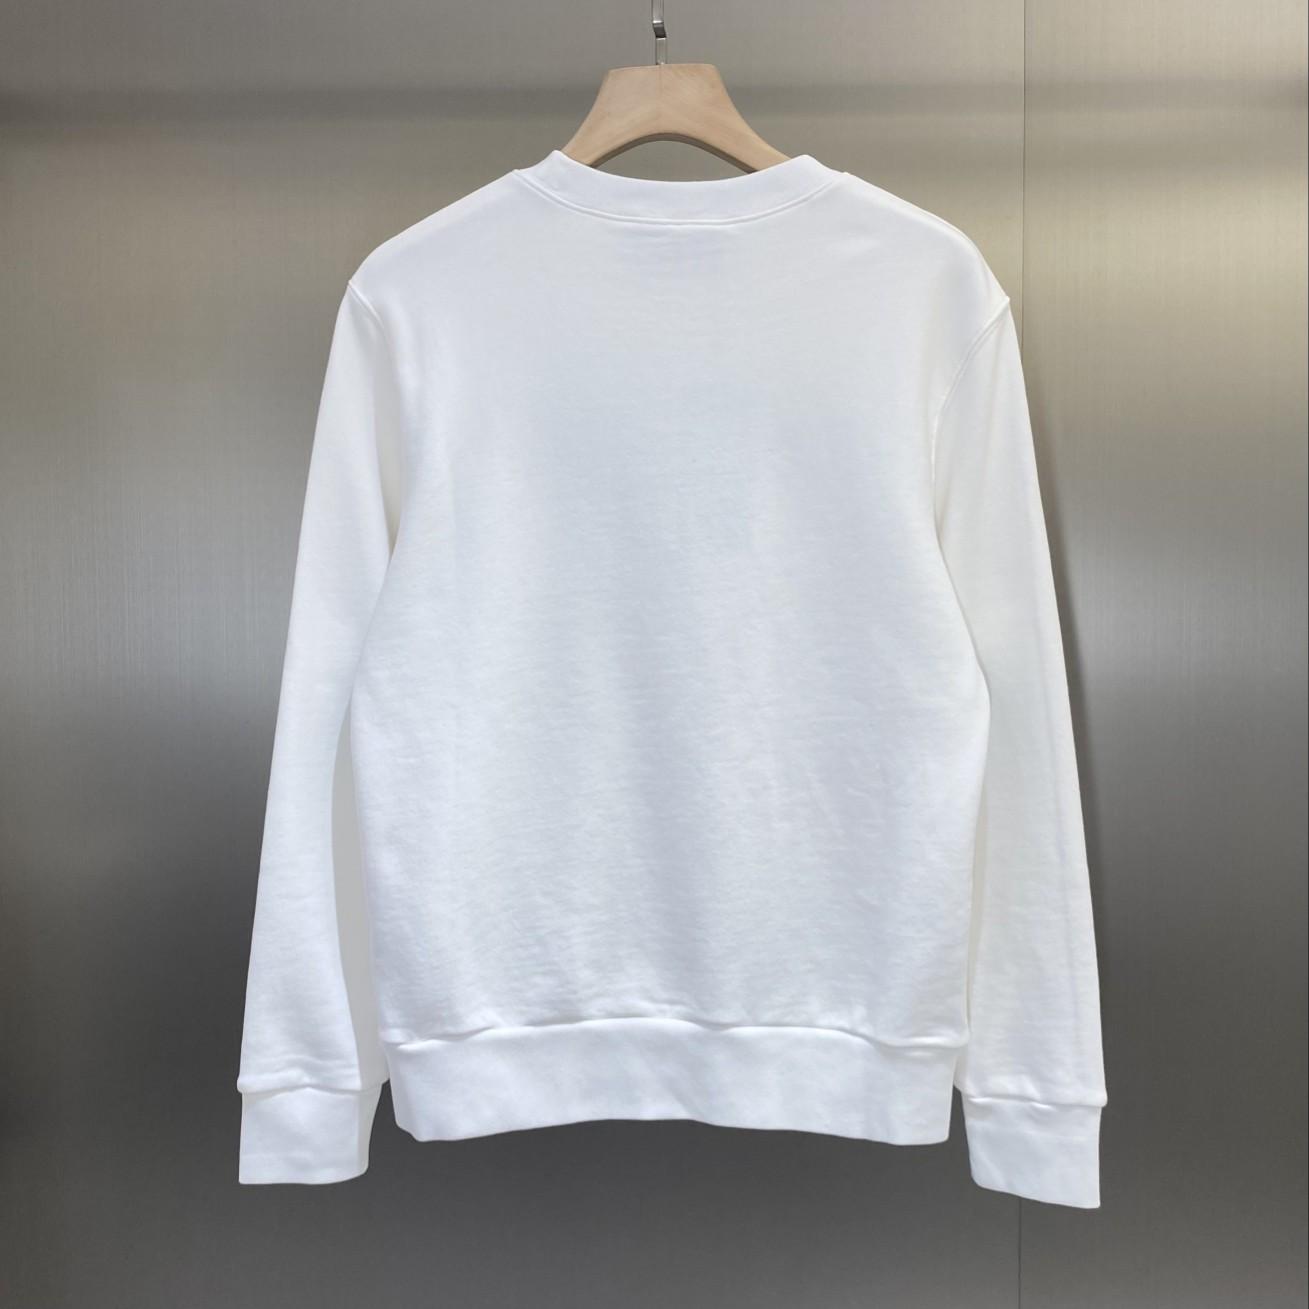 cotton-jersey-sweatshirt-5004_16844005883-1000